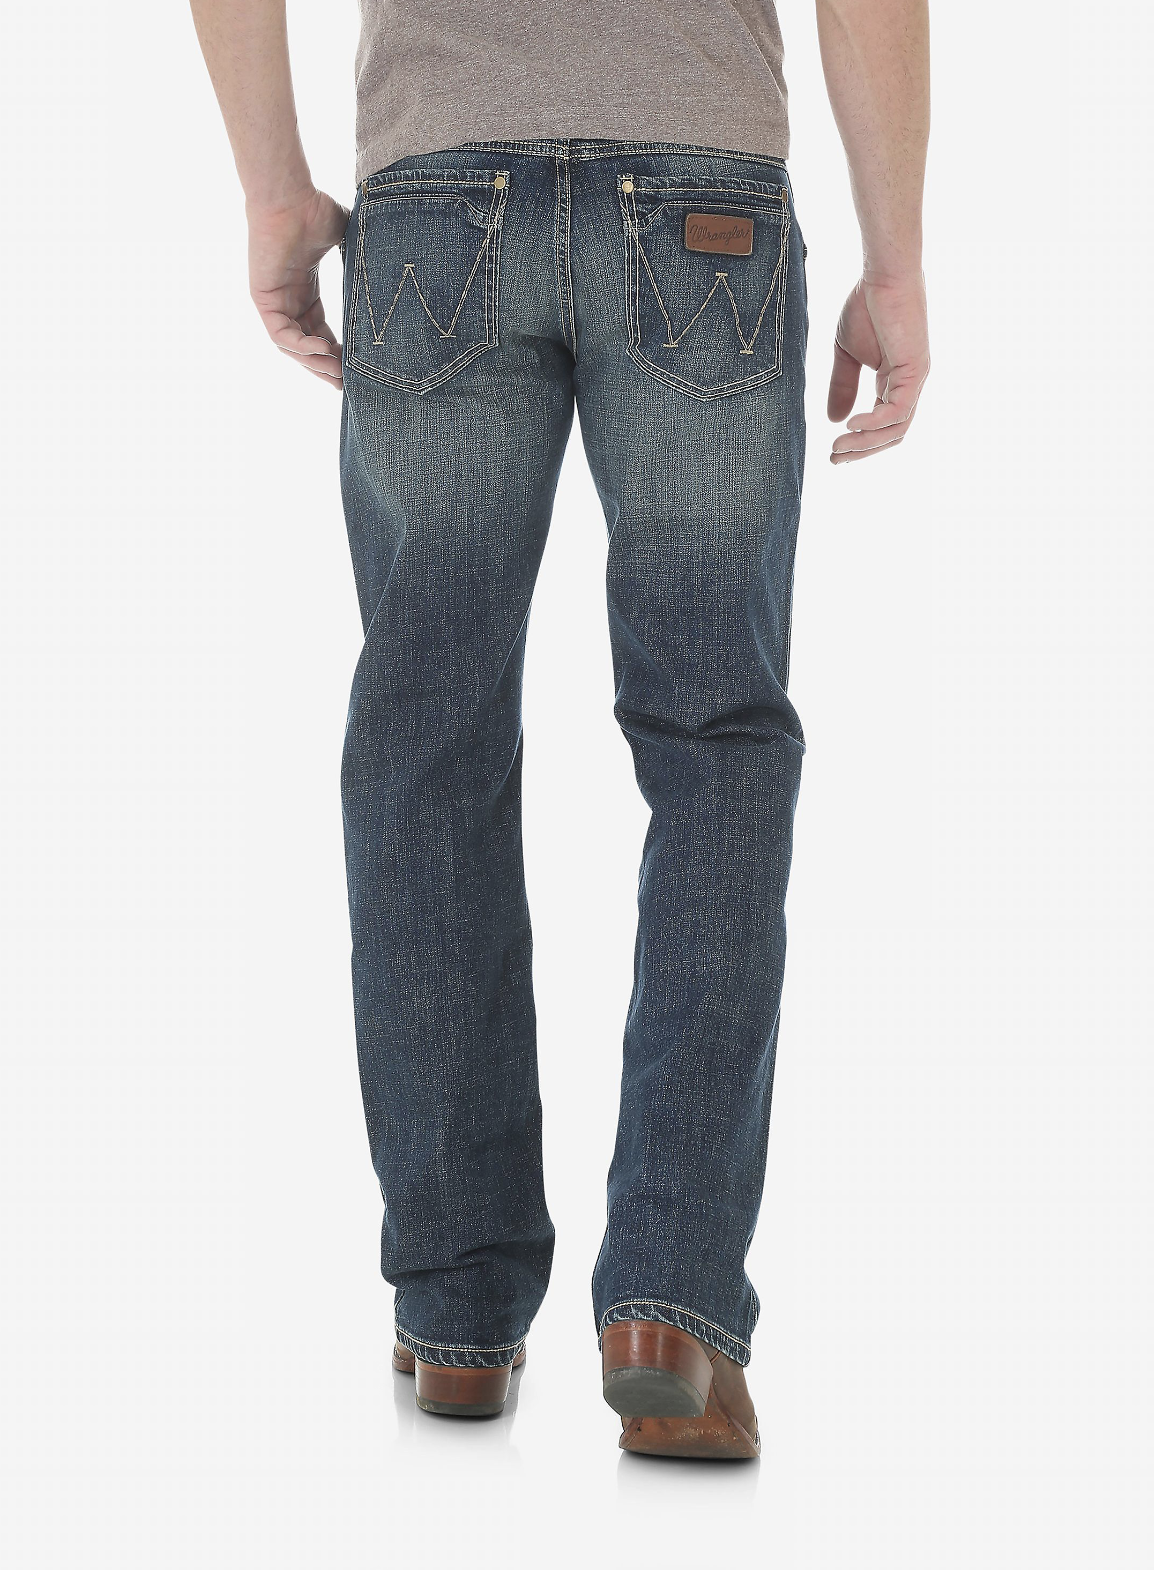 Retro Slim Fit Bootcut Jean (Layton) By Wrangler – Dales Clothing Inc